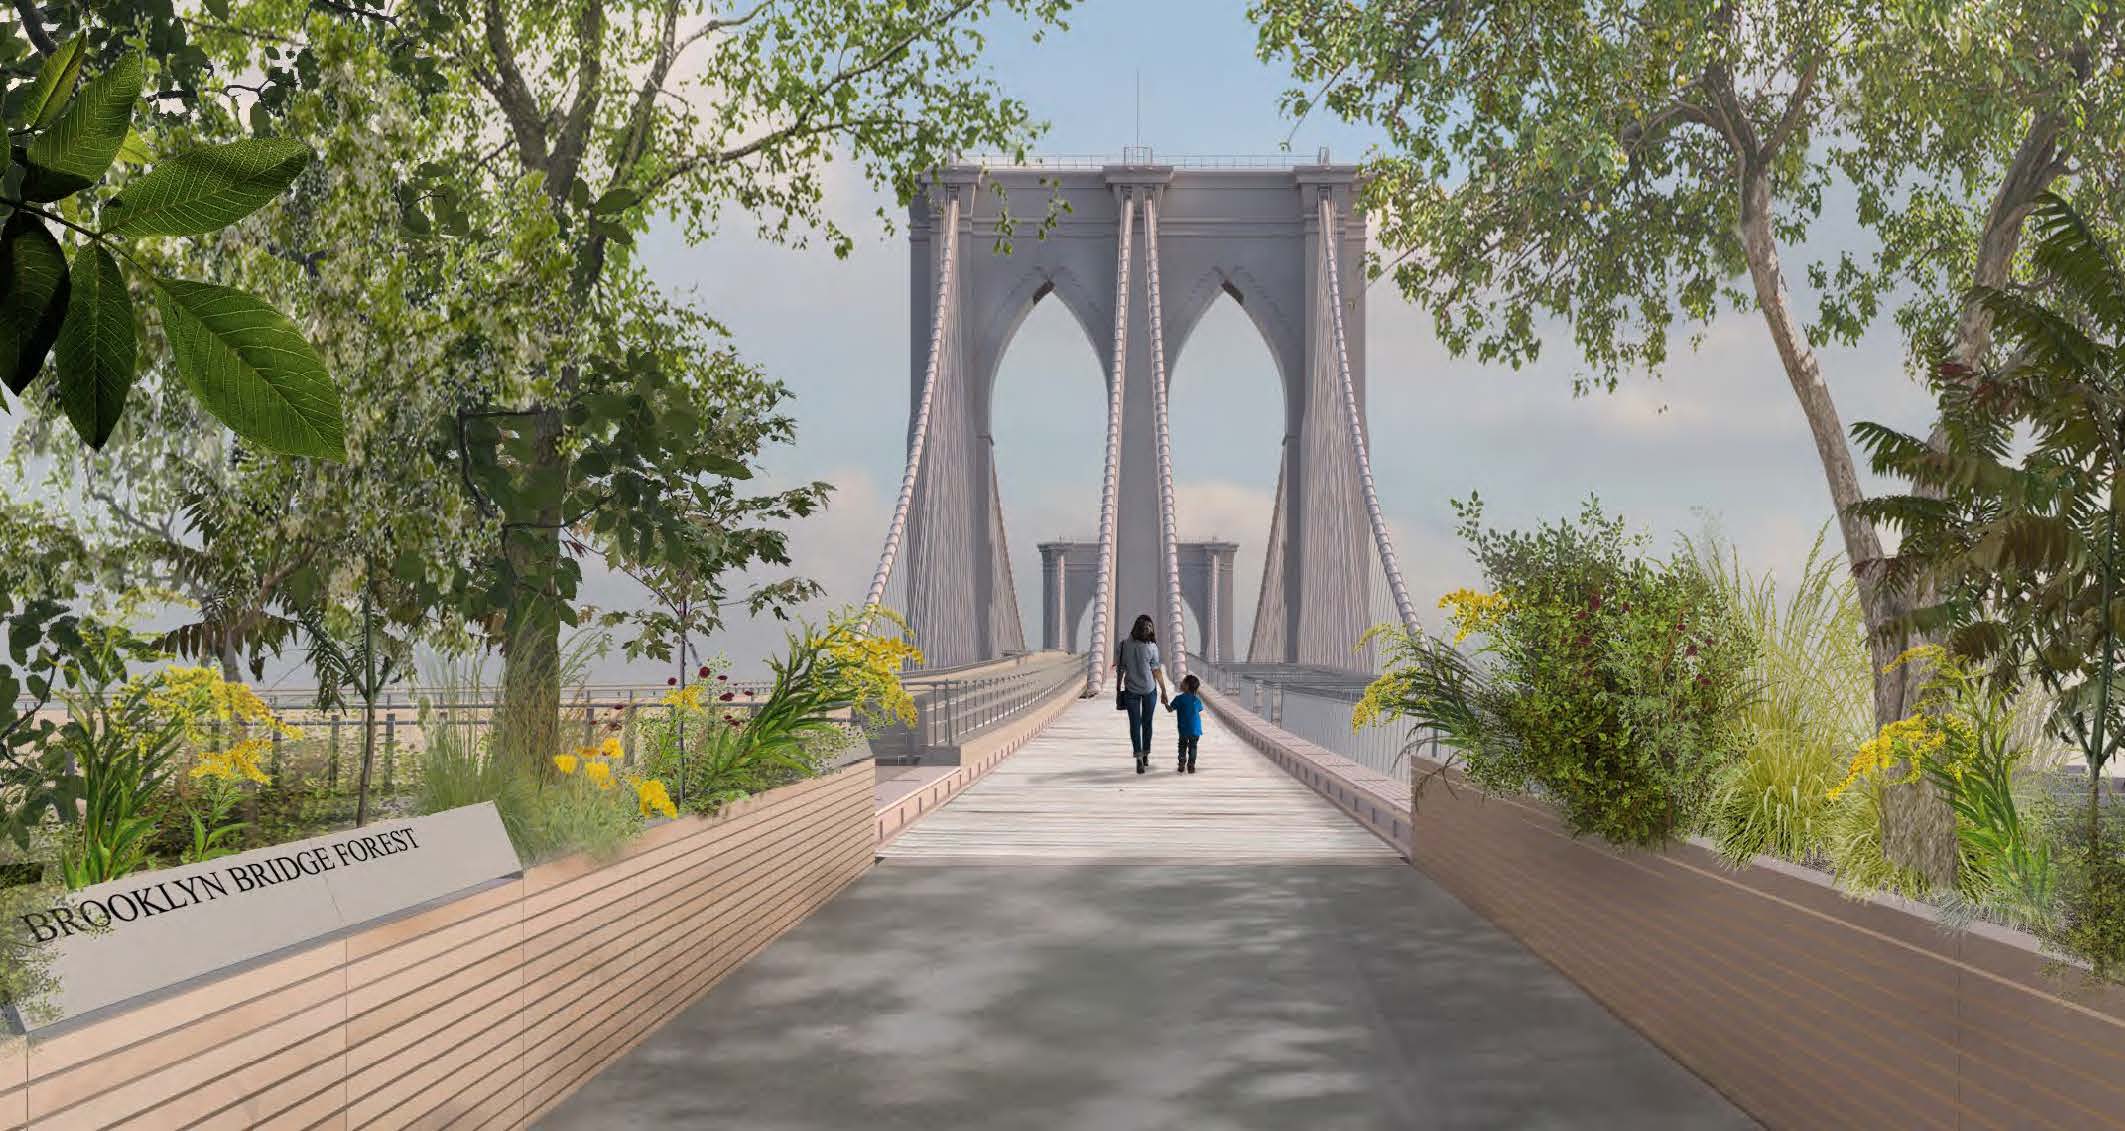 rendering of a design proposal for a revamped Brooklyn Bridge walkway